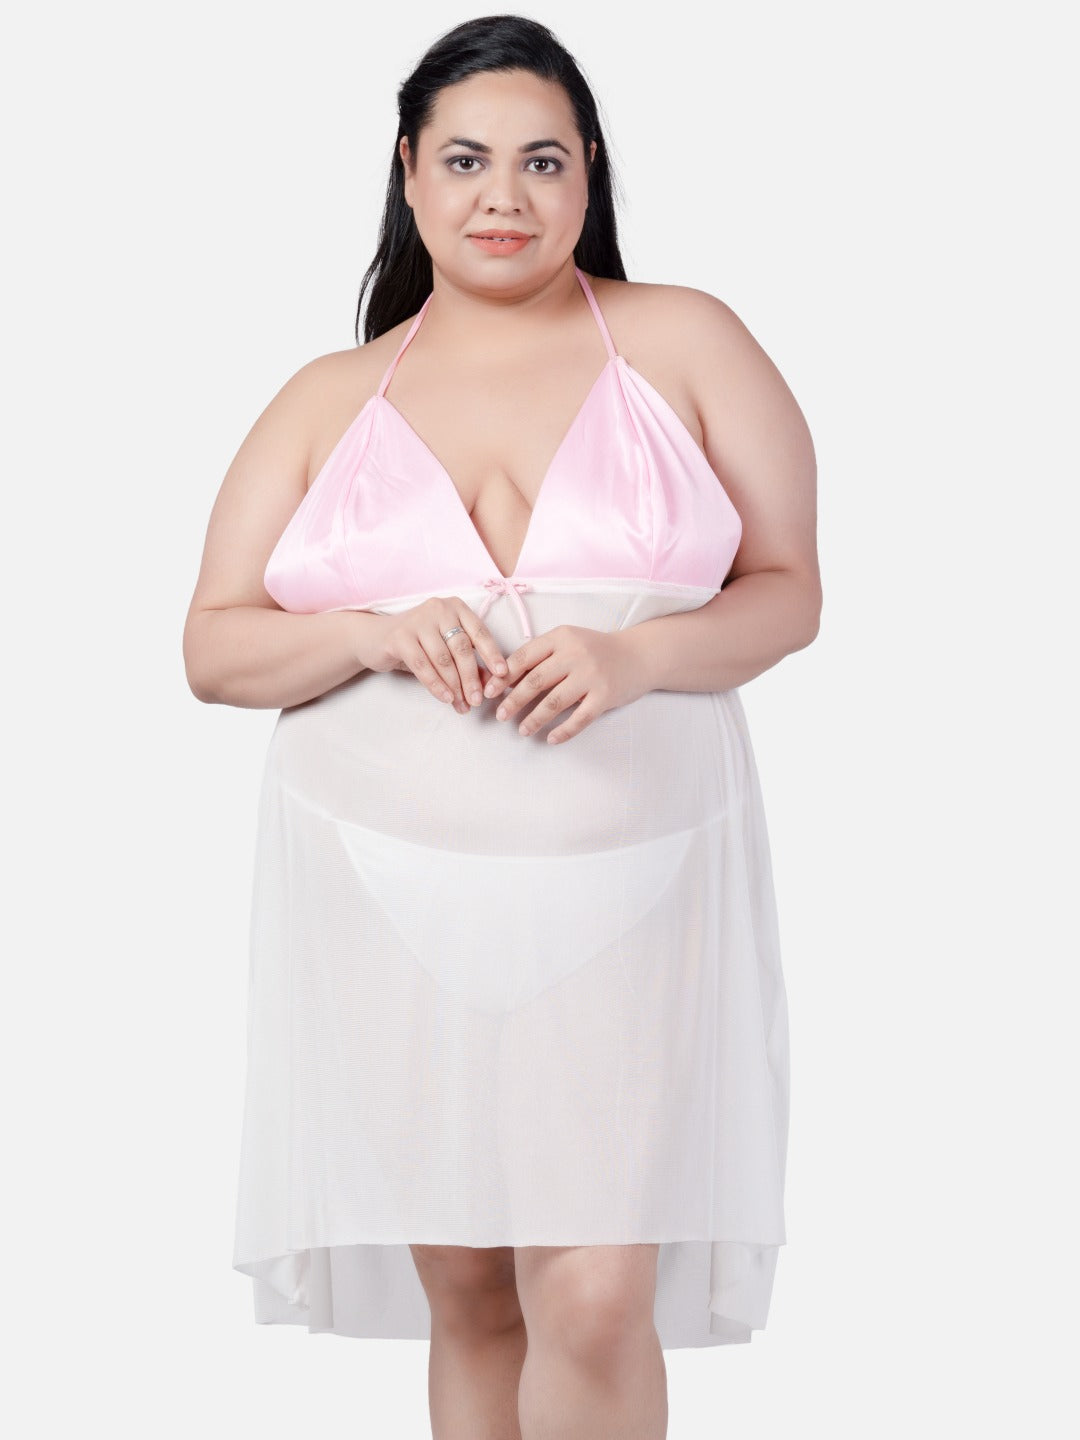 Plus Size Sexy Babydoll Honeymoon Pink White Dress for Women K9RbA